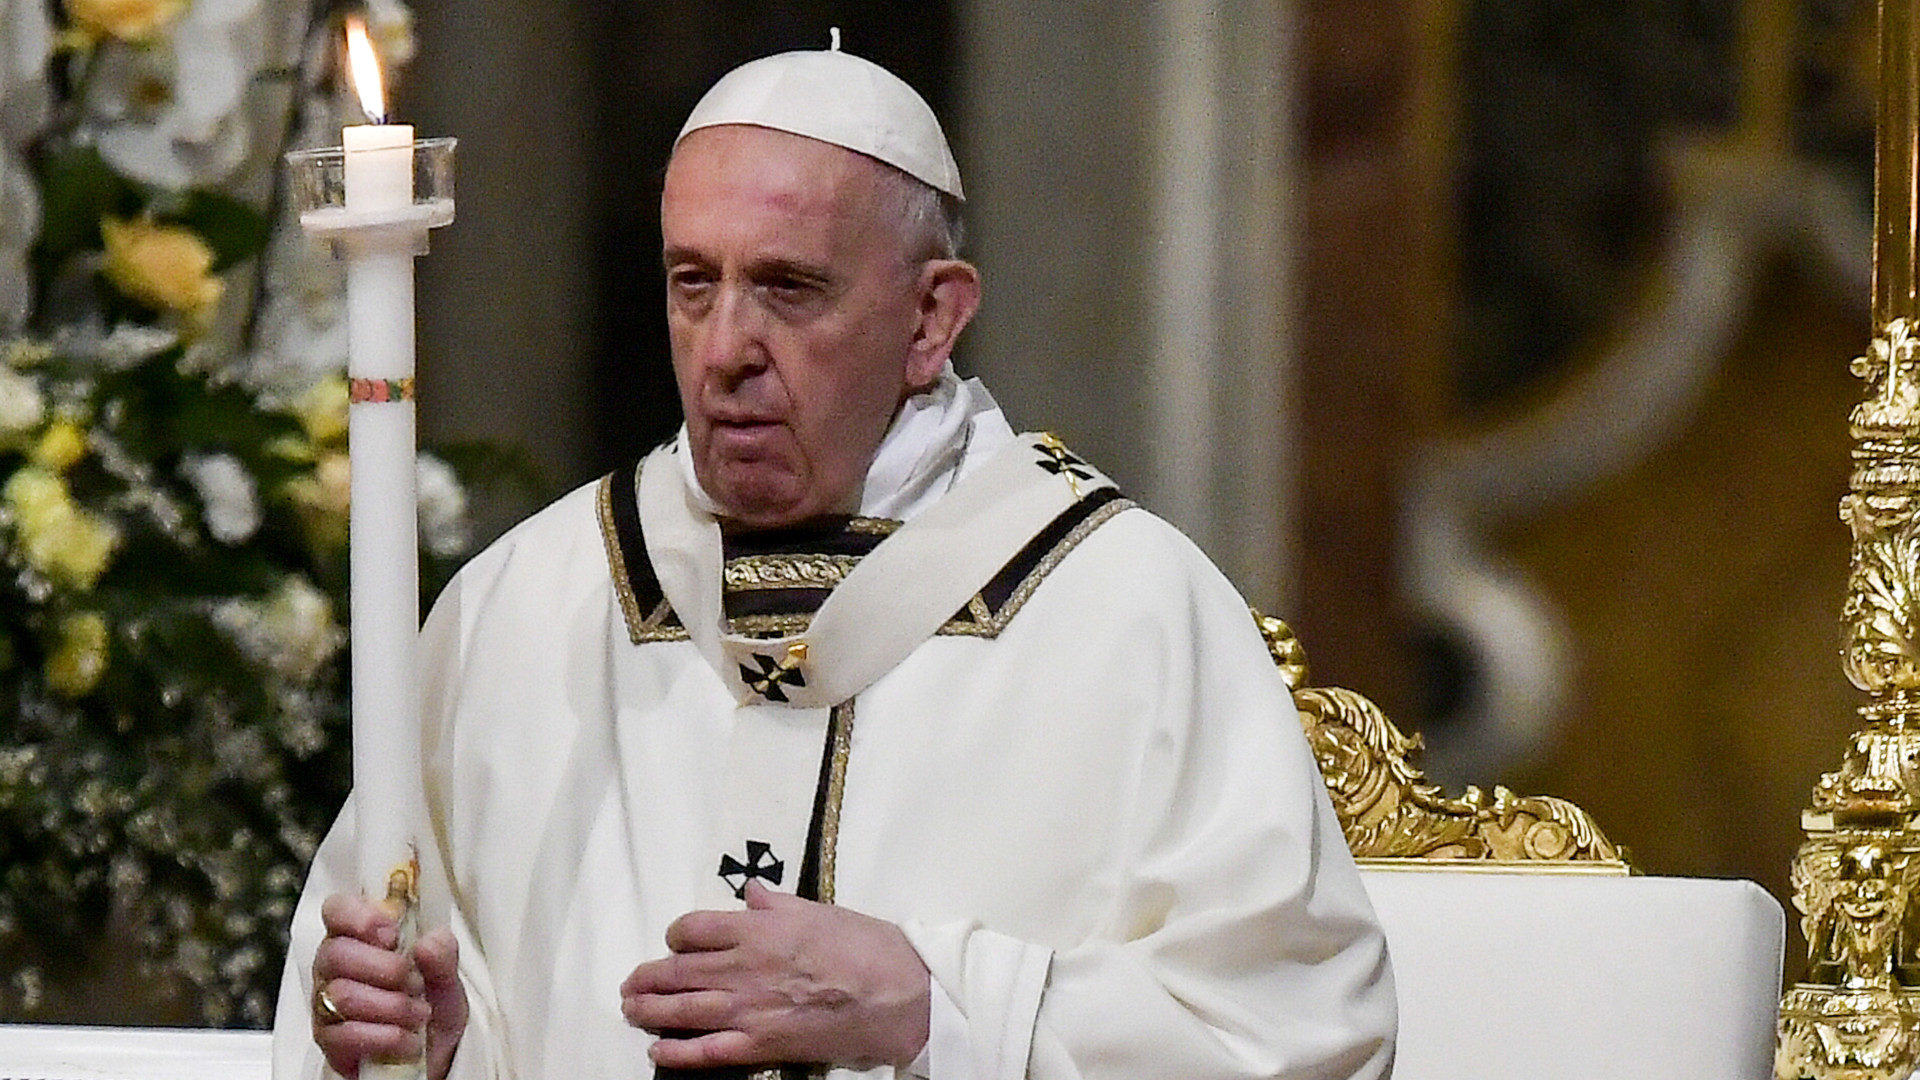 Papst Franziskus hält eine Kerze während der Osternacht am 20. April 2019 im Petersdom